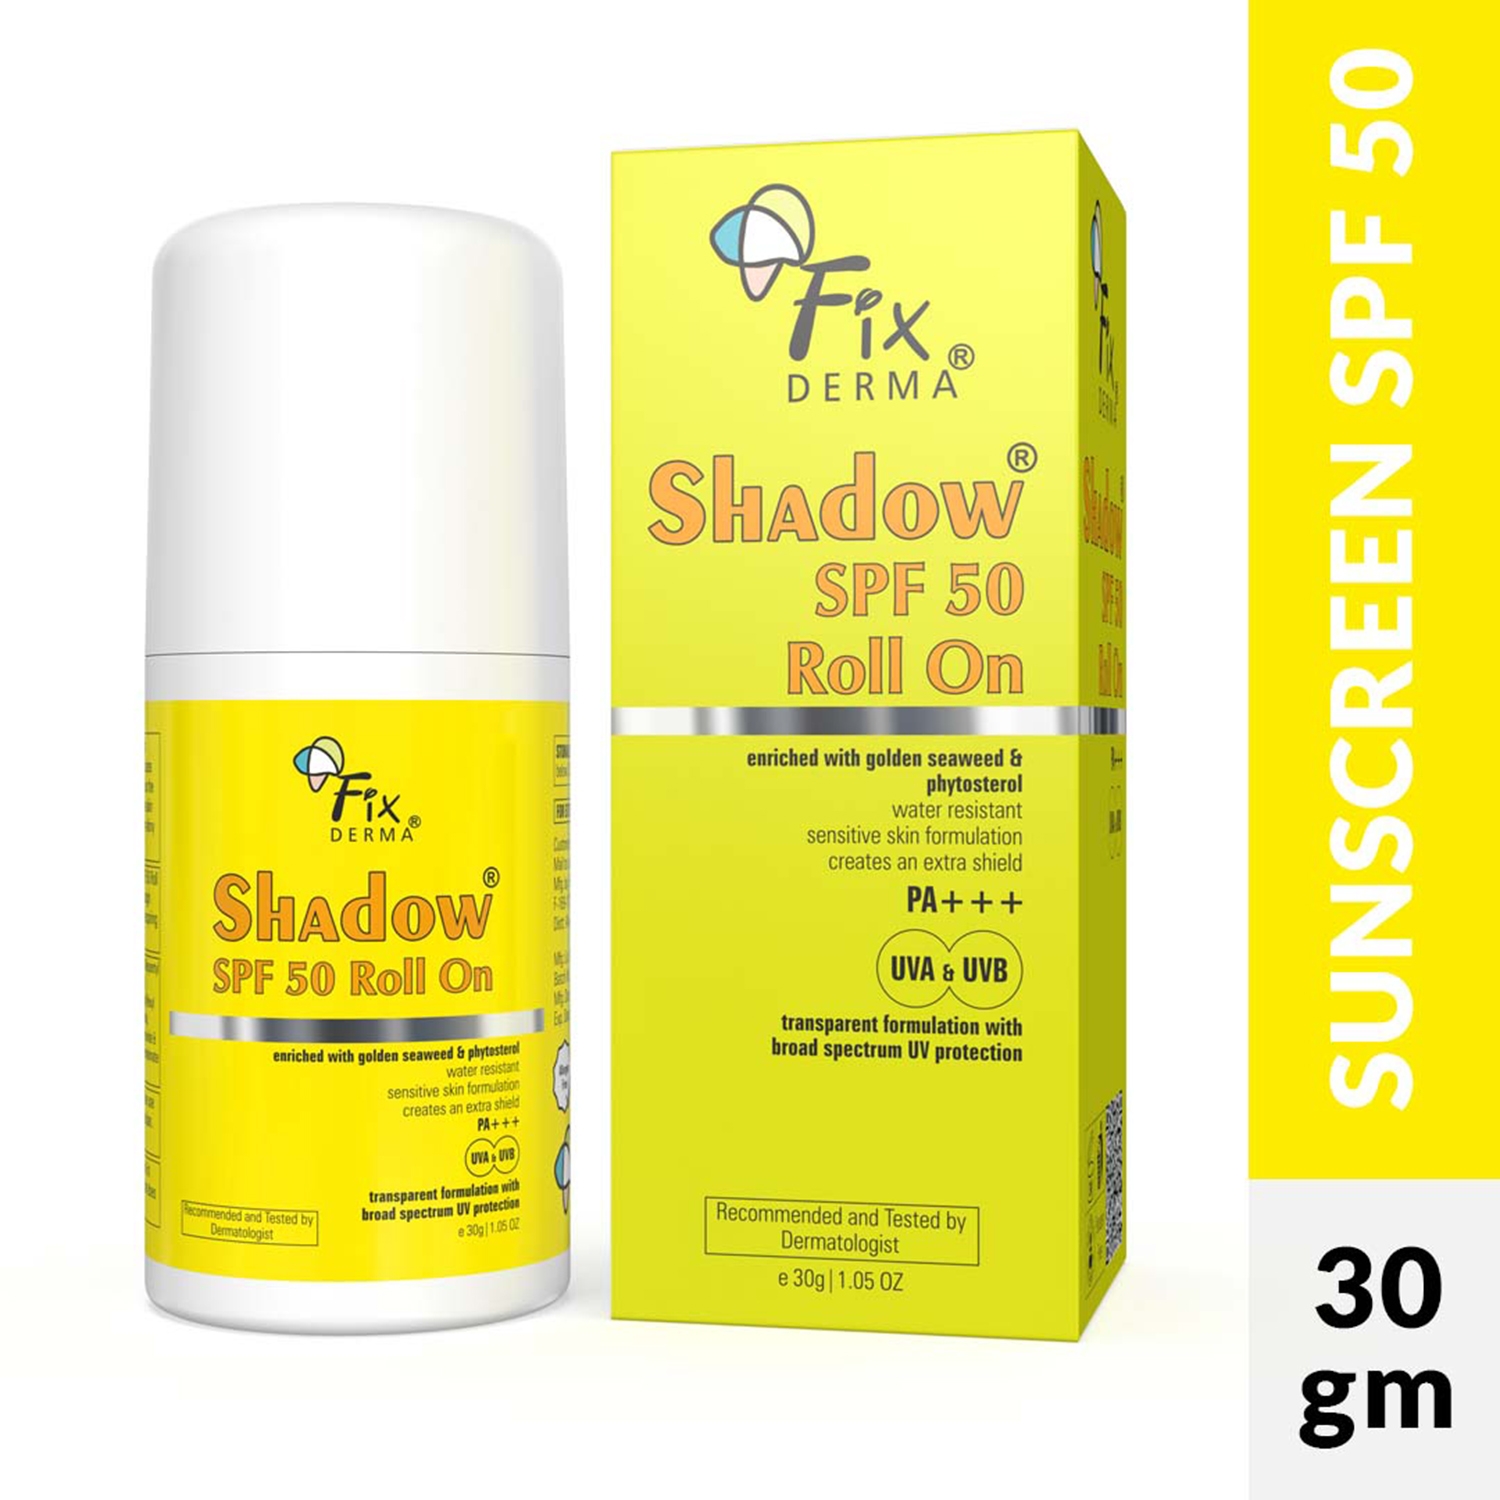 Fixderma | Fixderma Shadow Sunscreen Roll On SPF 50 PA+++ UVA & UVB Protection (30g)